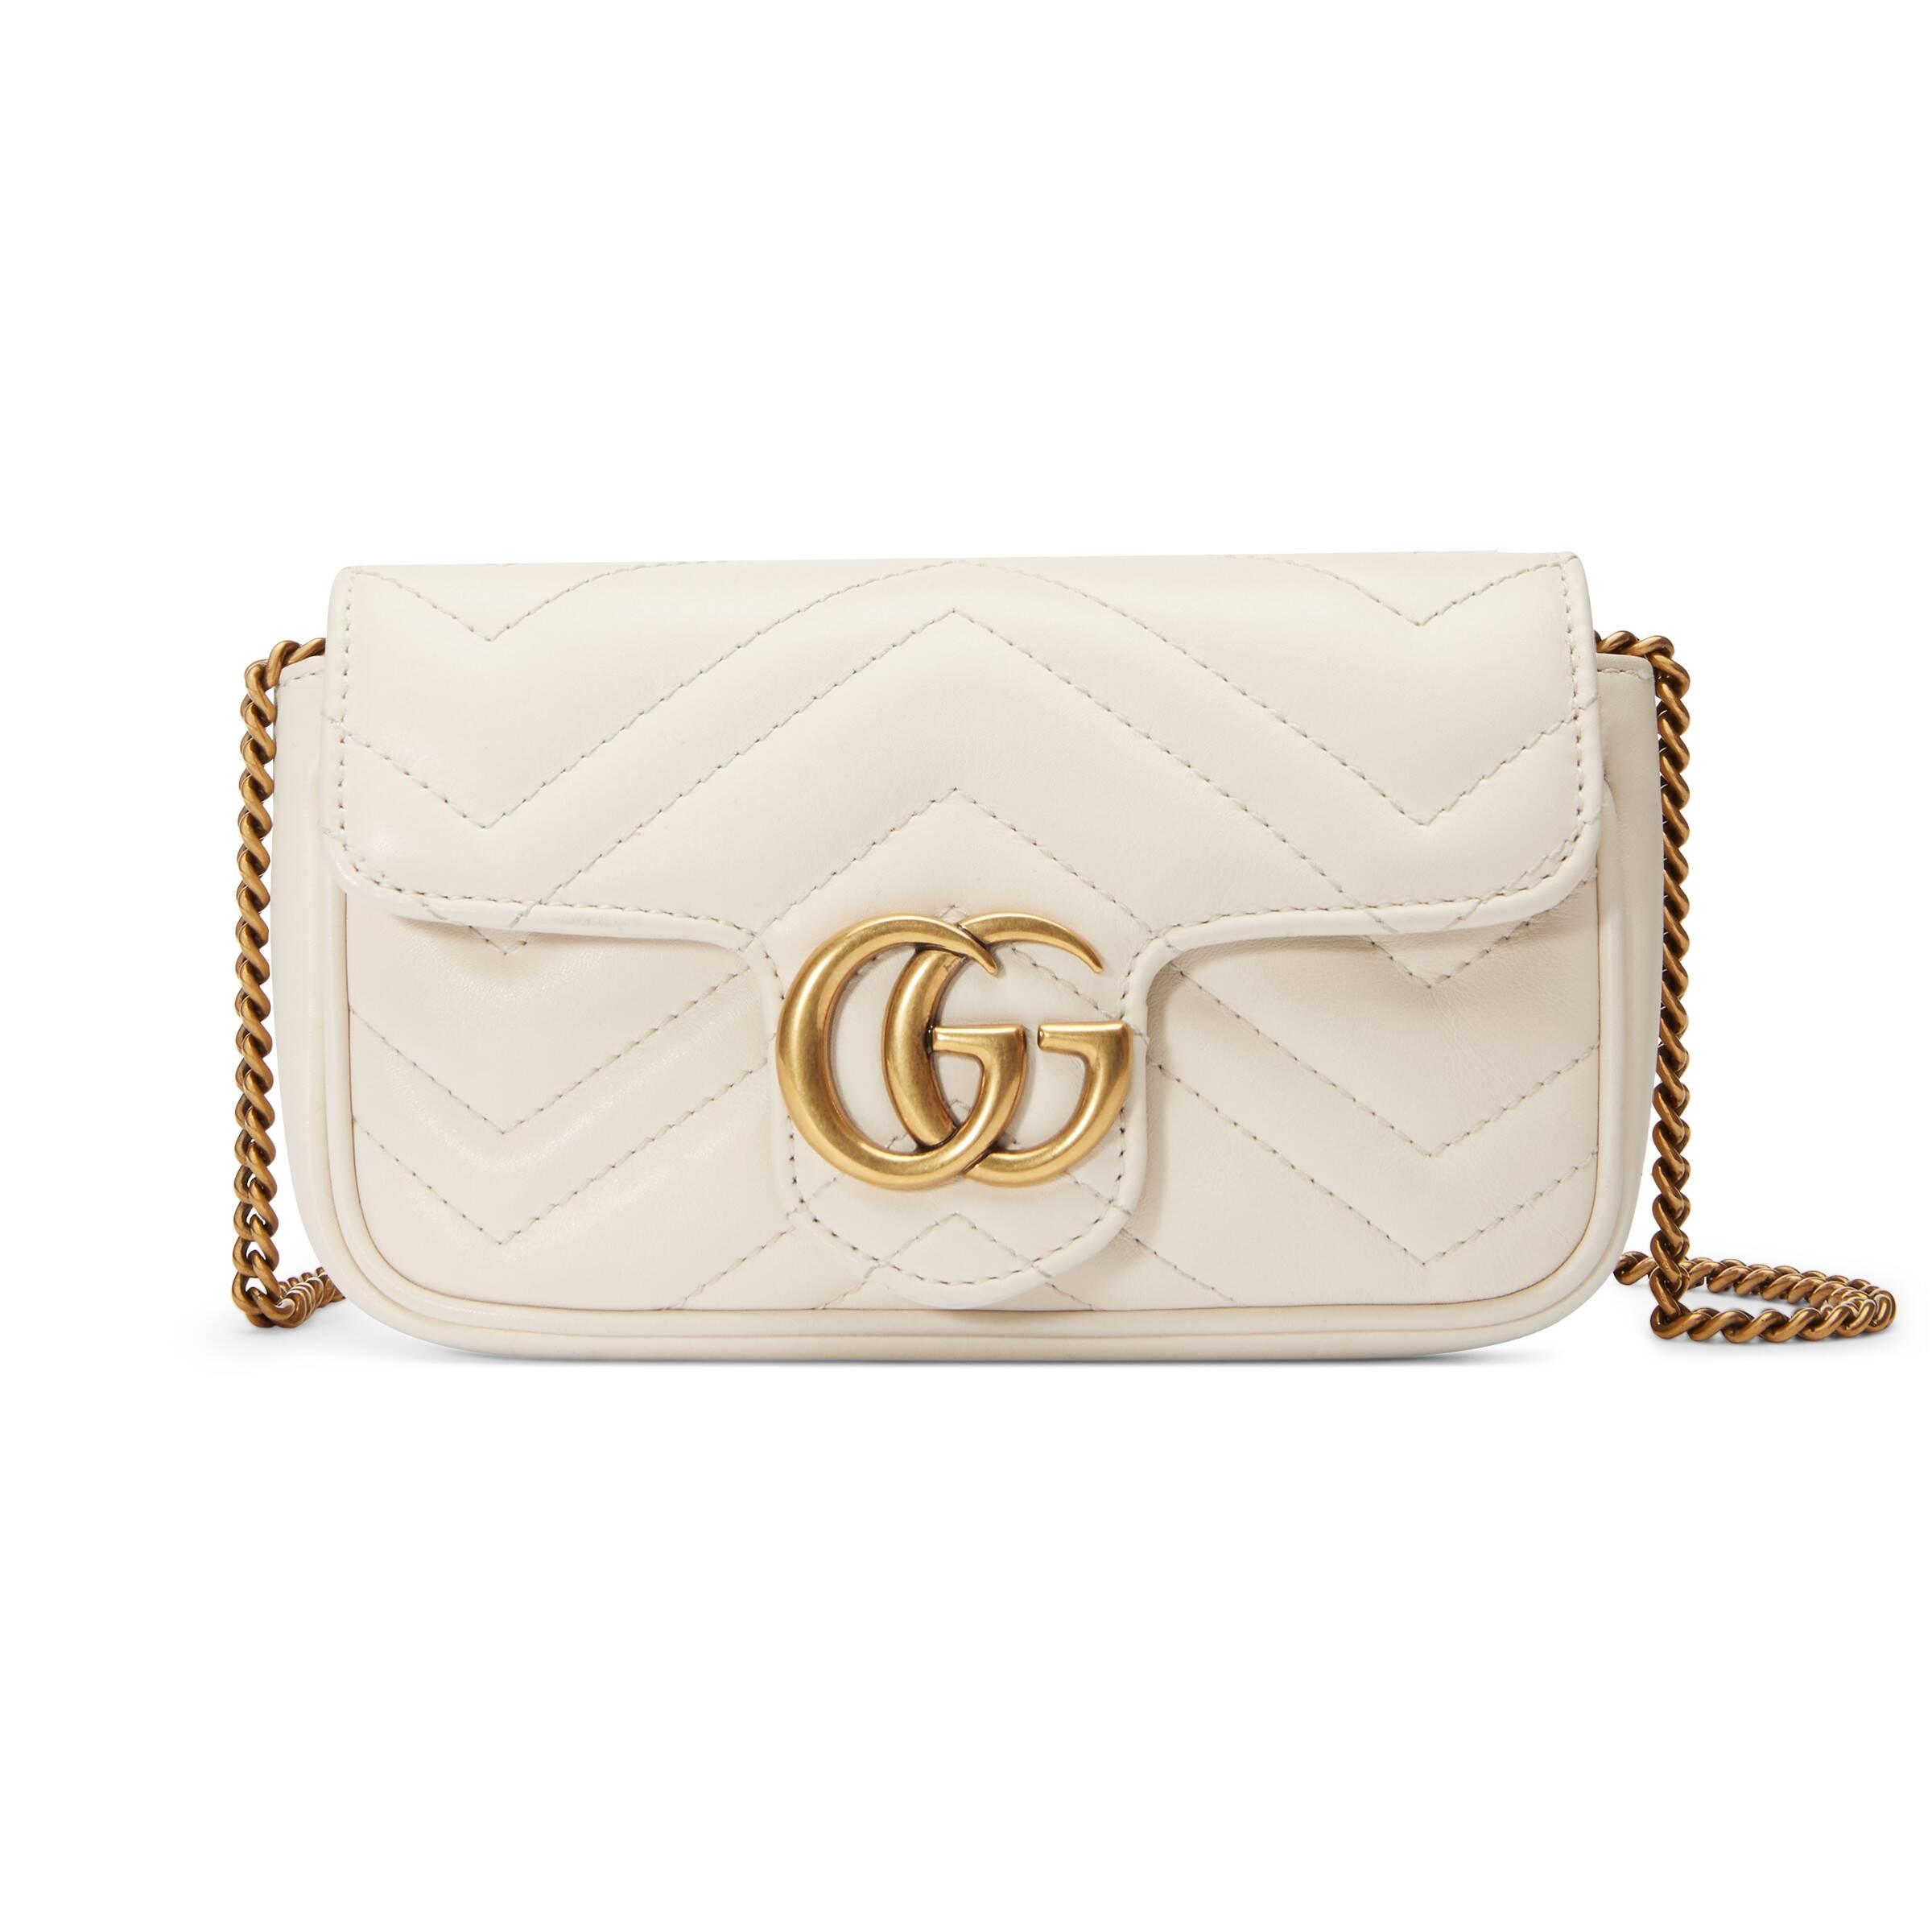 Gucci GG Marmont Matelassé Leather Super Mini Bag in White - Lyst